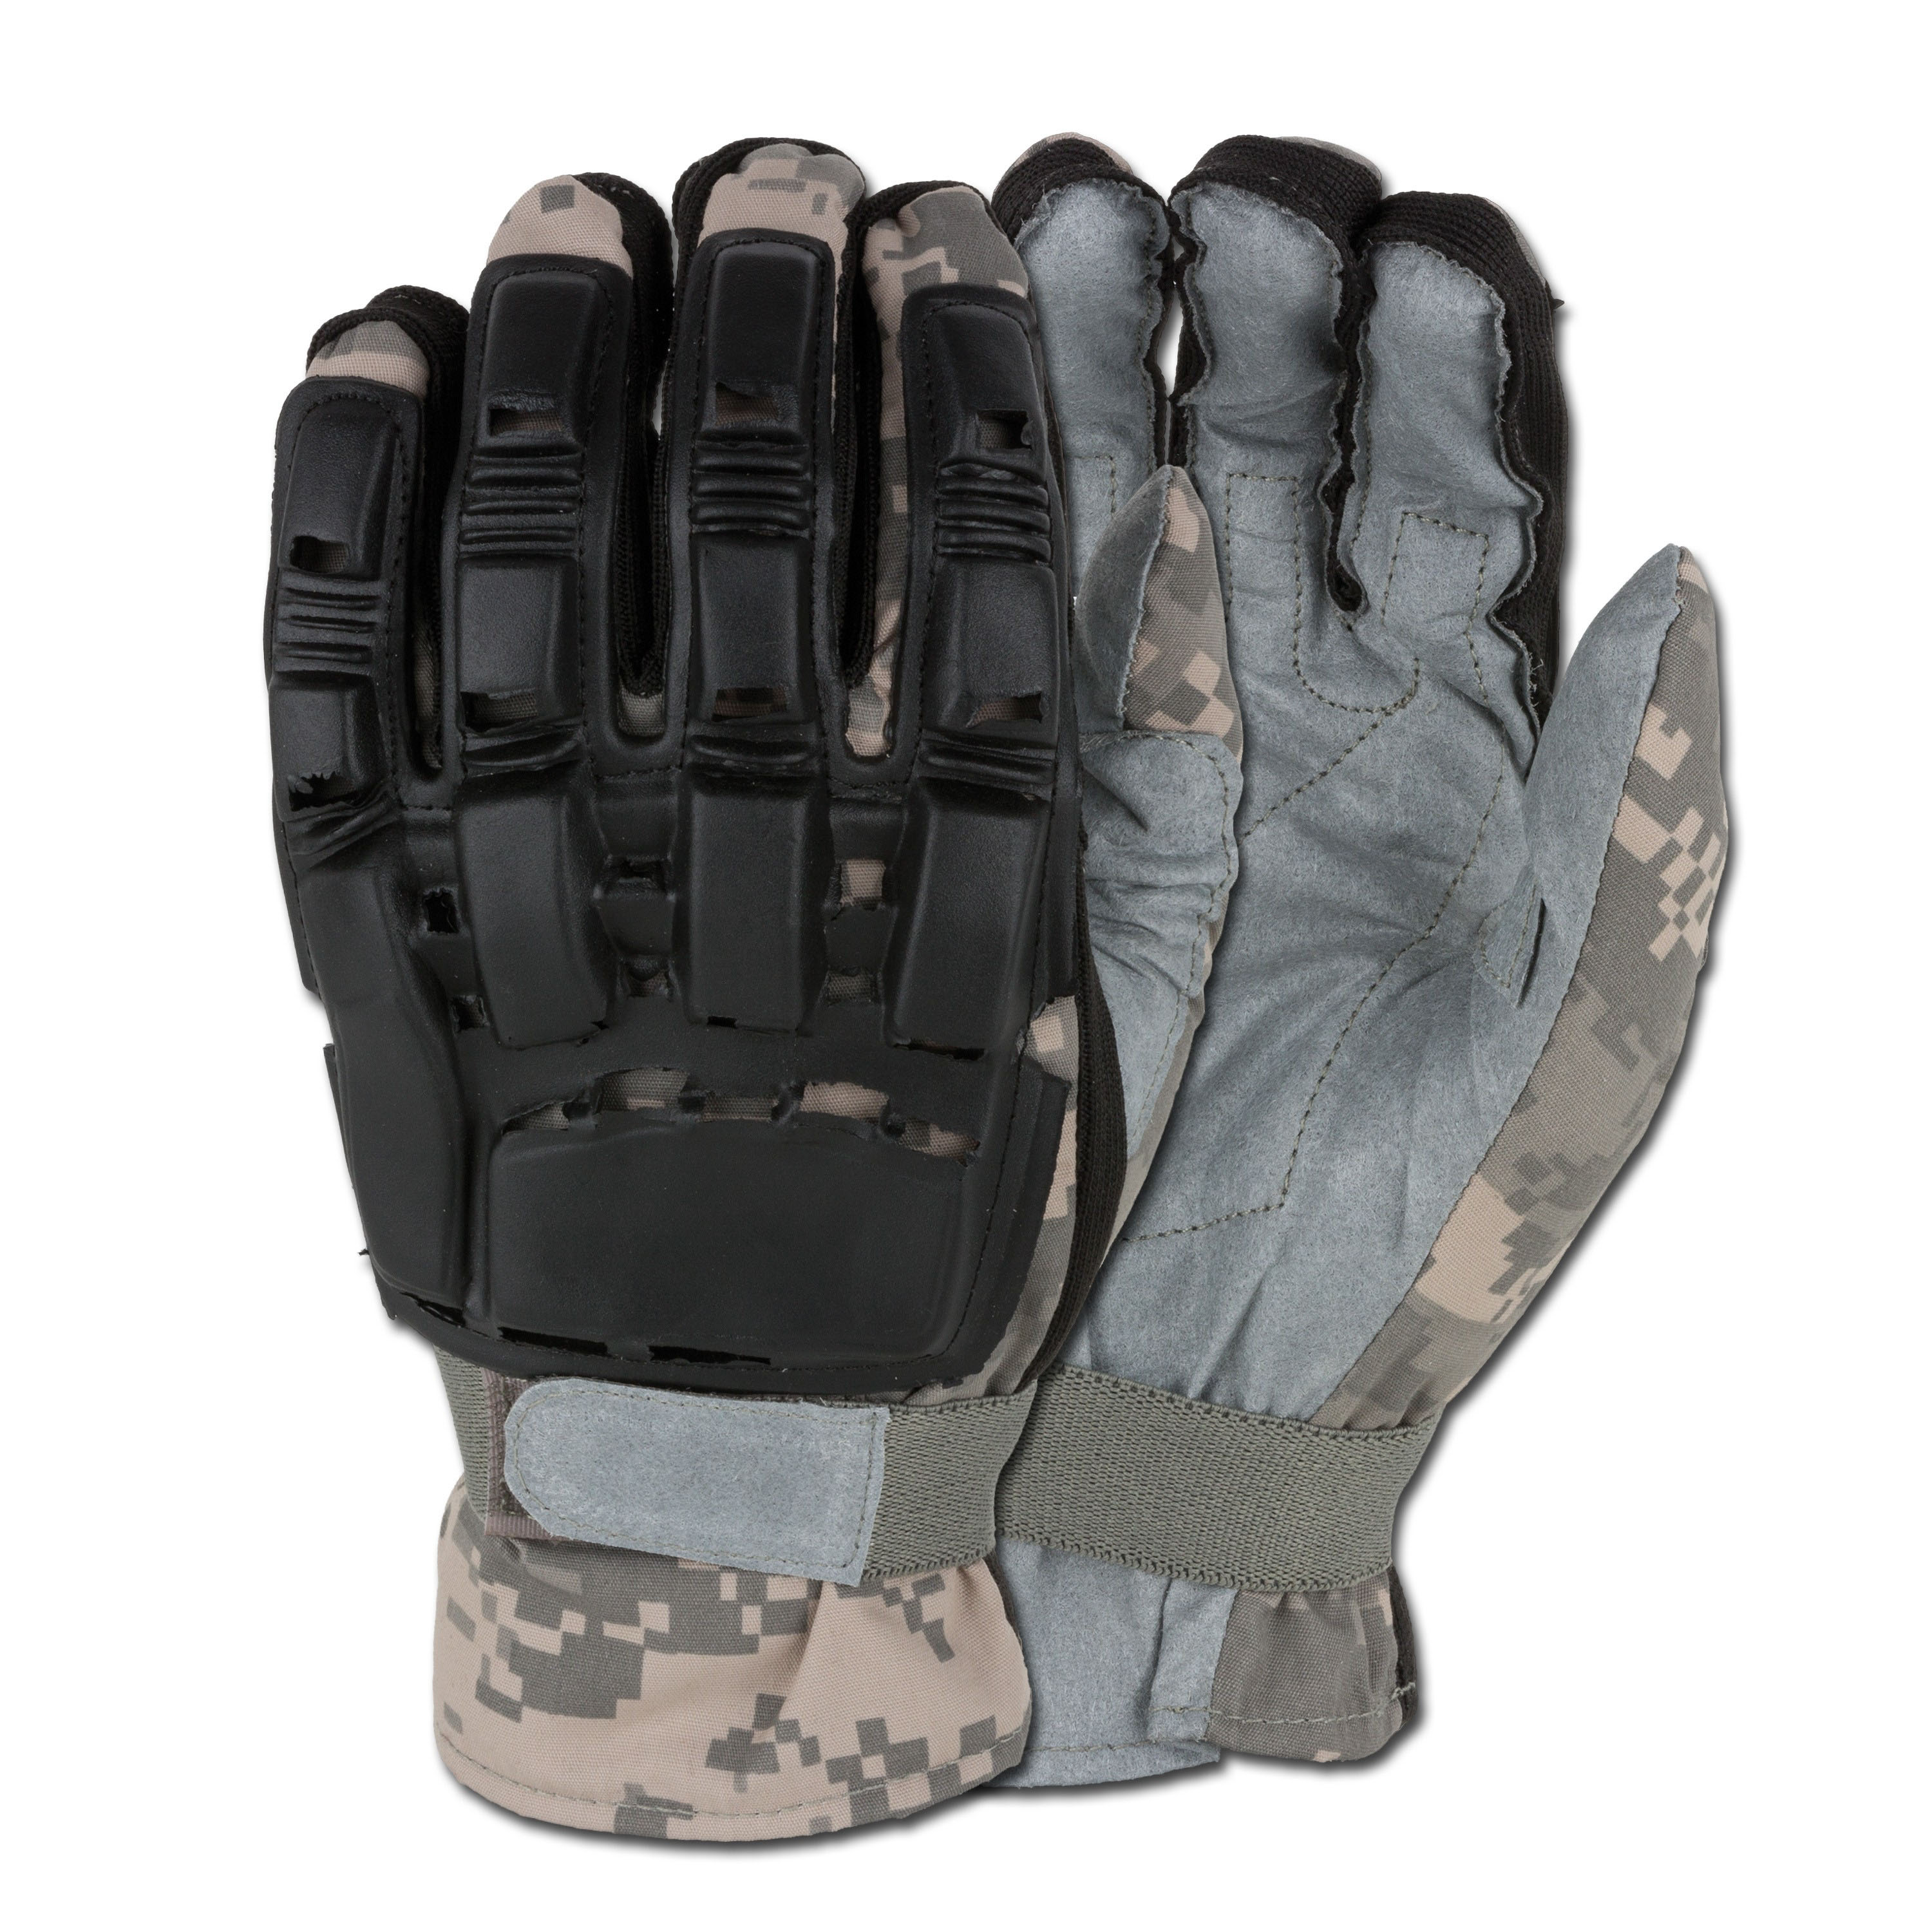 Handschuhe Army Gloves Einsatzhandschuhe Schutzhandschuhe AT-digital 